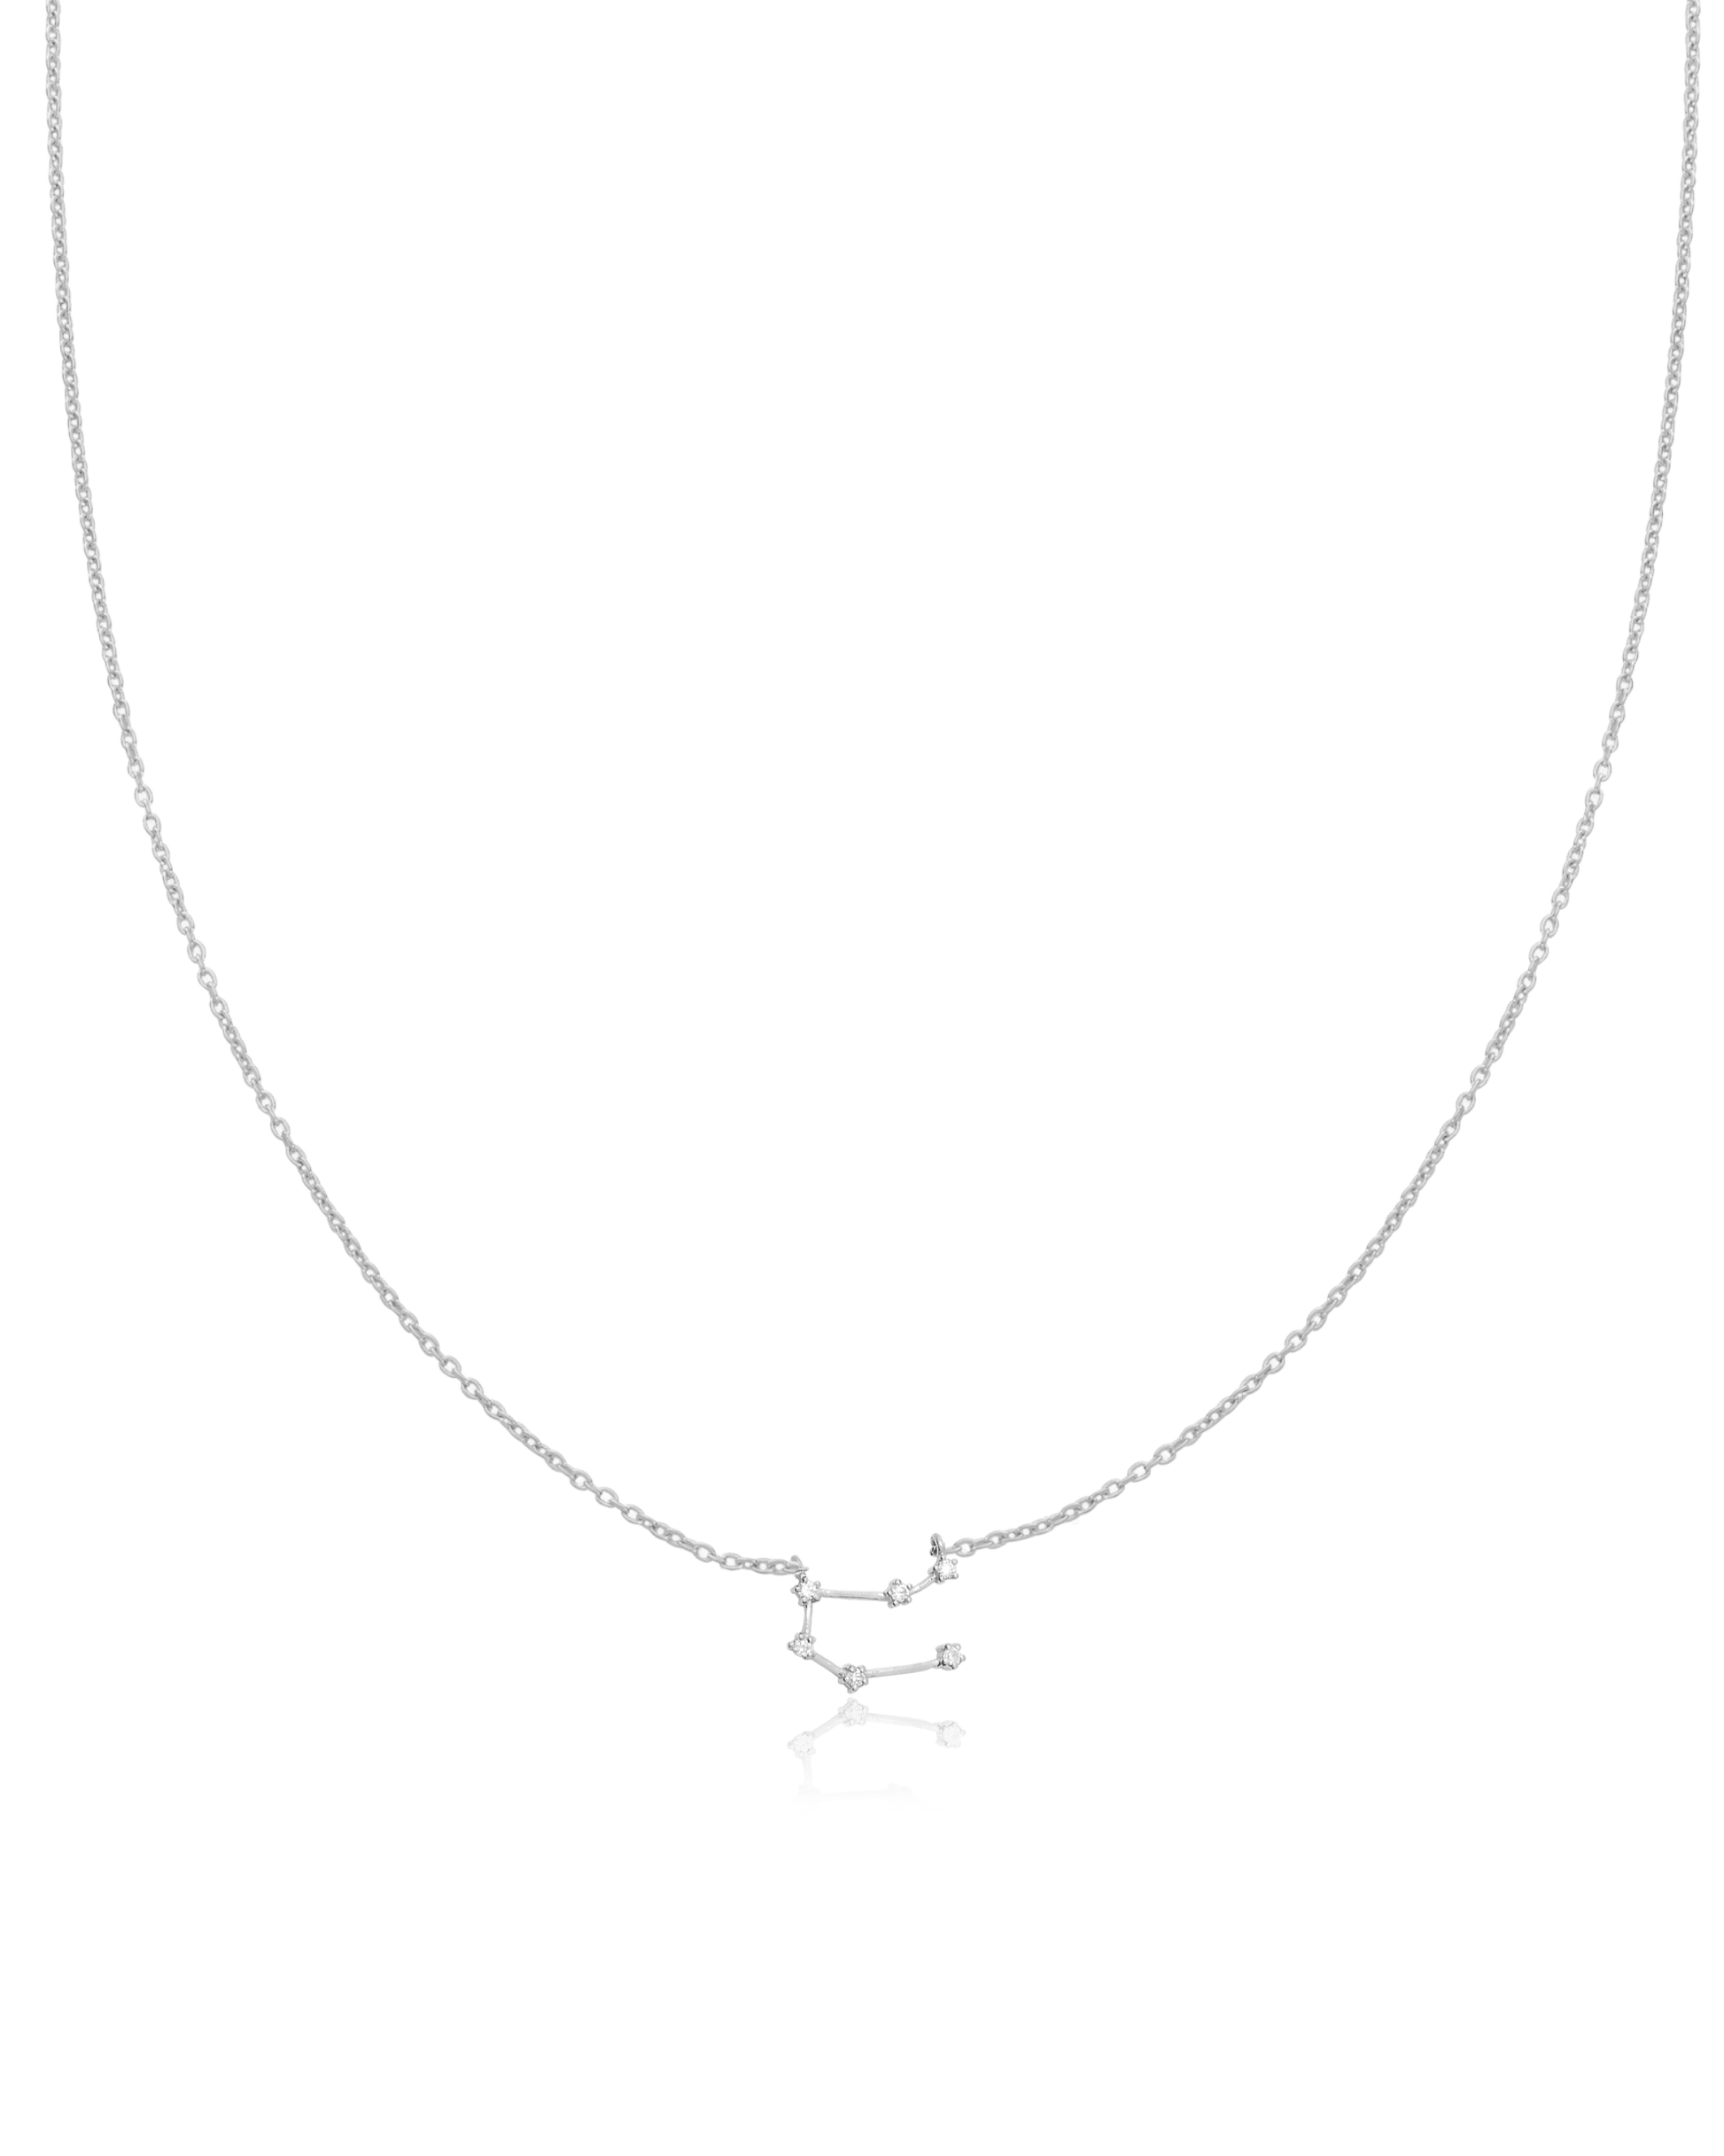 Gemini Constellation Necklace - 18K Gold Vermeil Necklaces magal-dev 